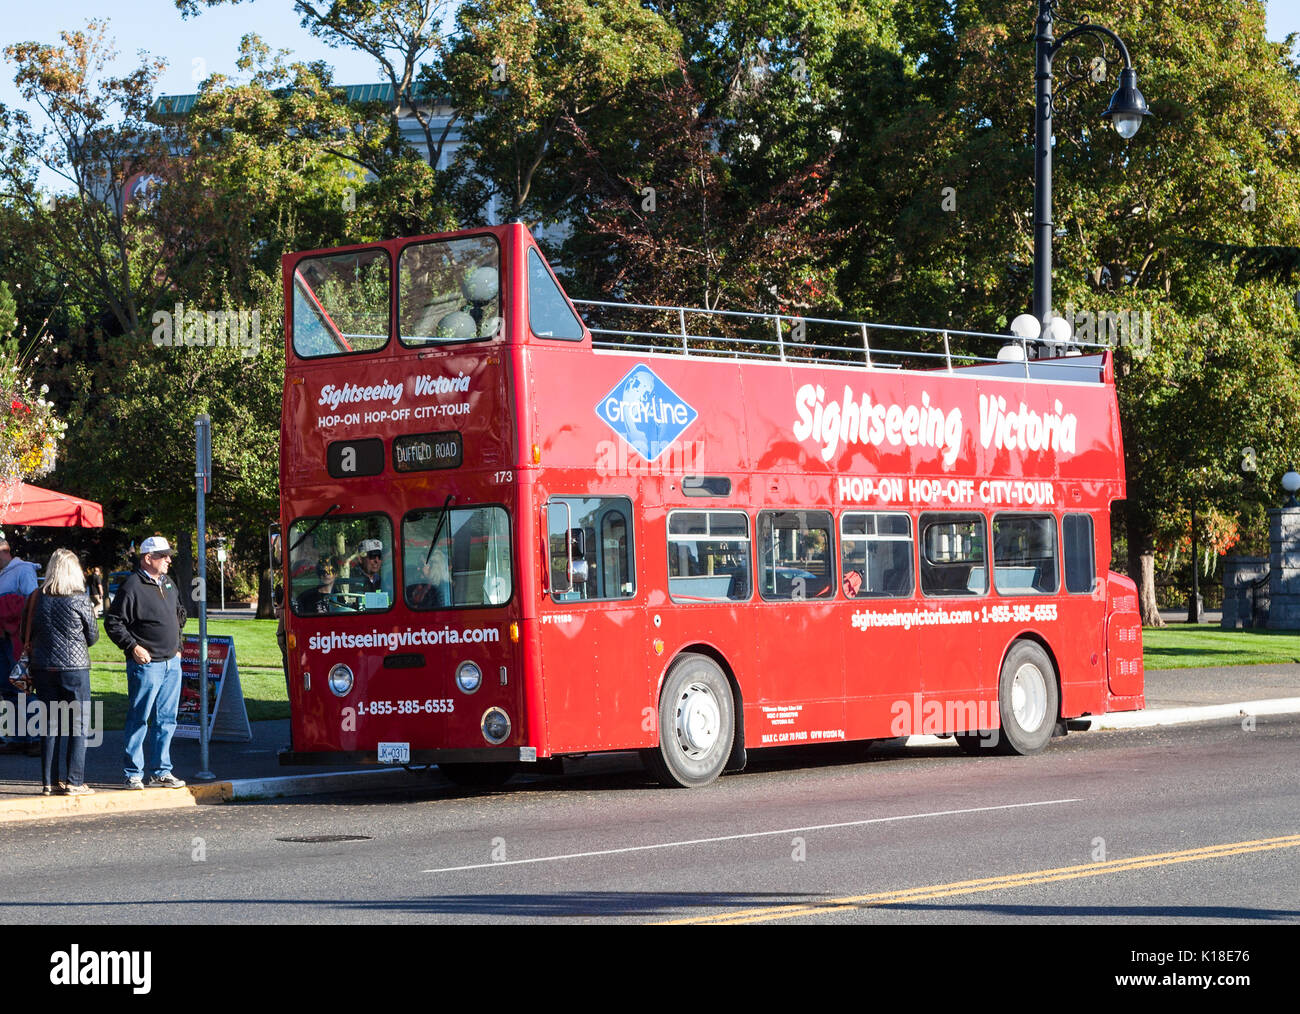 A red double decker tourist bus Victoria, Vancouver Island, Canada, North America Stock Photo